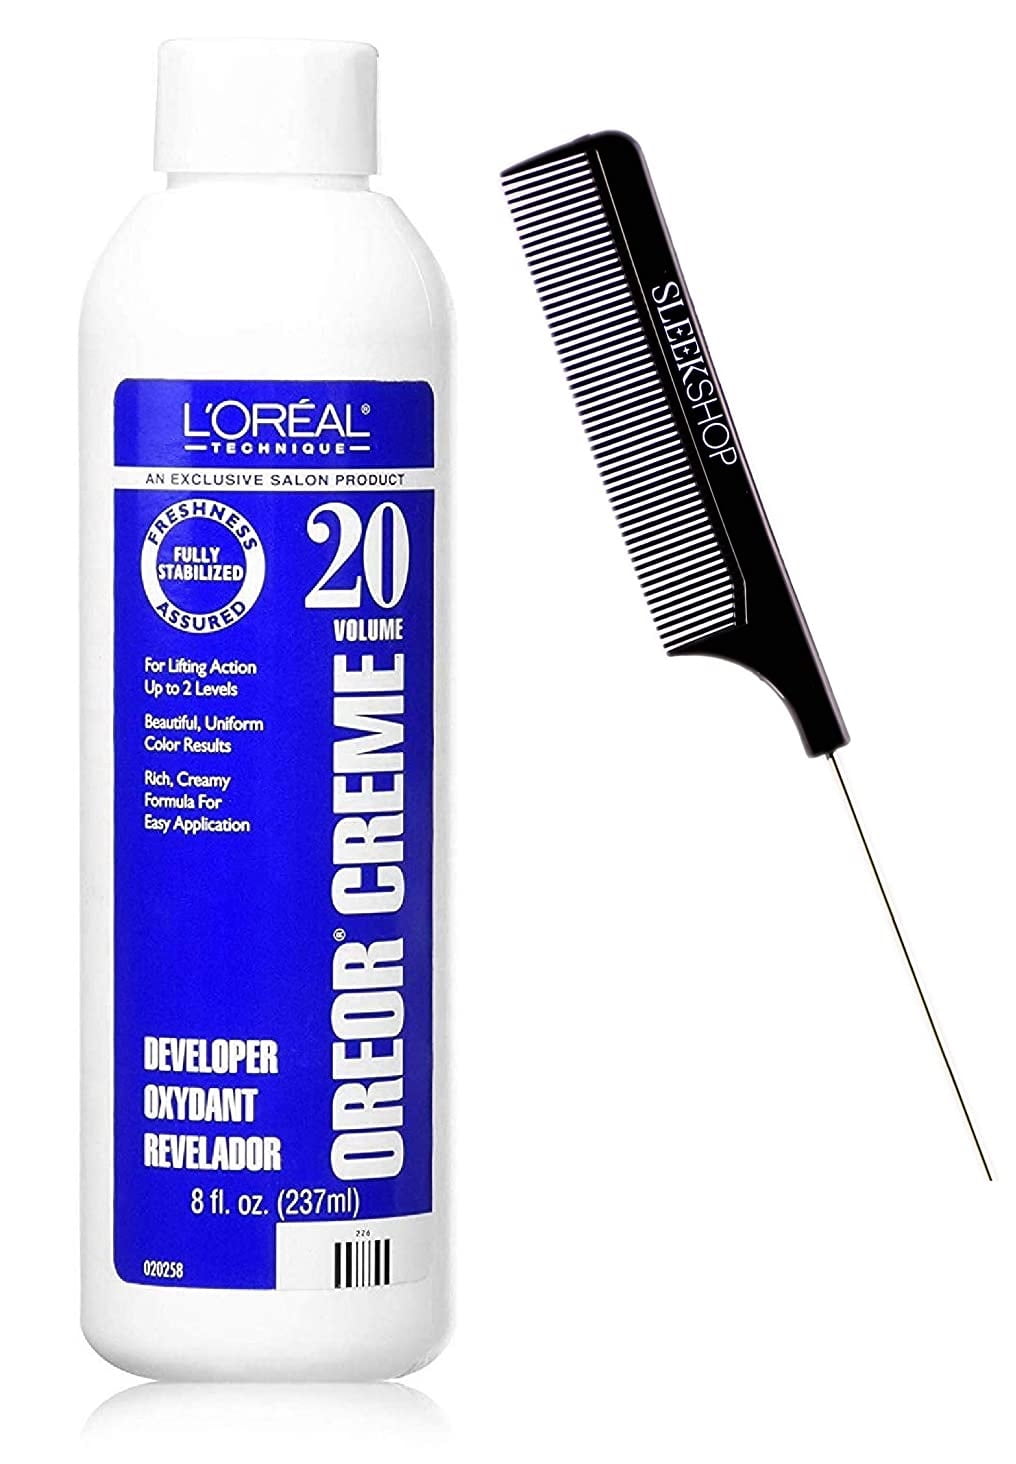 L'oreal Technique OREOR Creme Developer Activator for Hair Color Dye (w